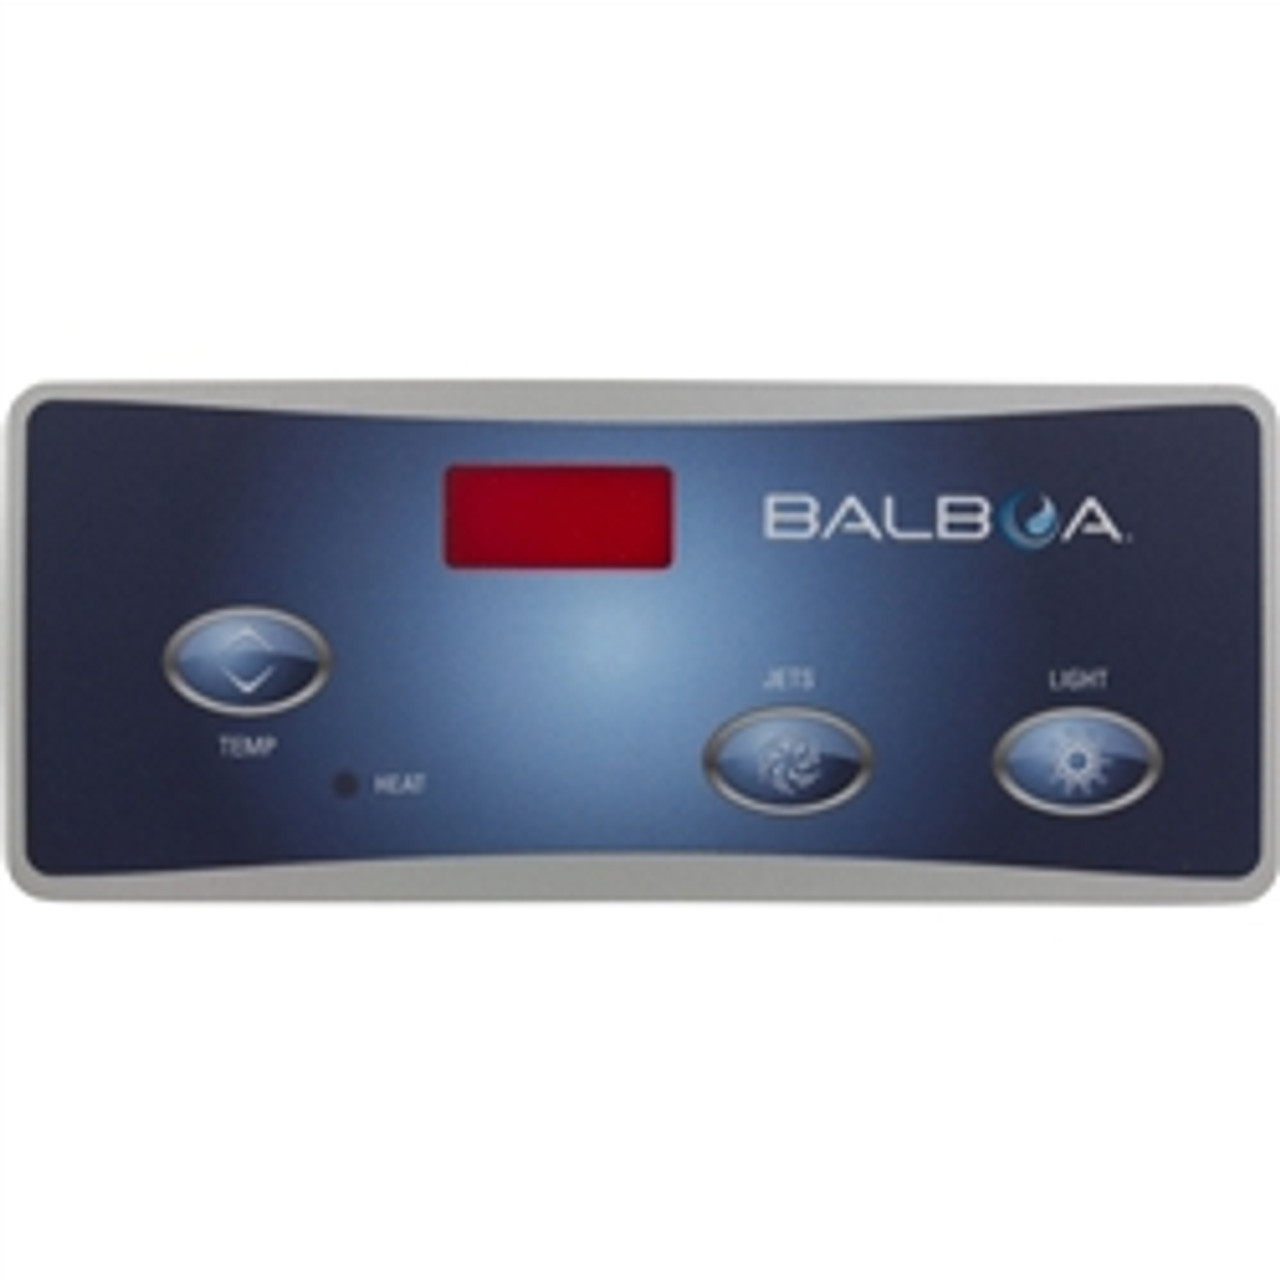 Balboa Overlay - Digital Duplex / VL404, Set, Jets and Light, 10352